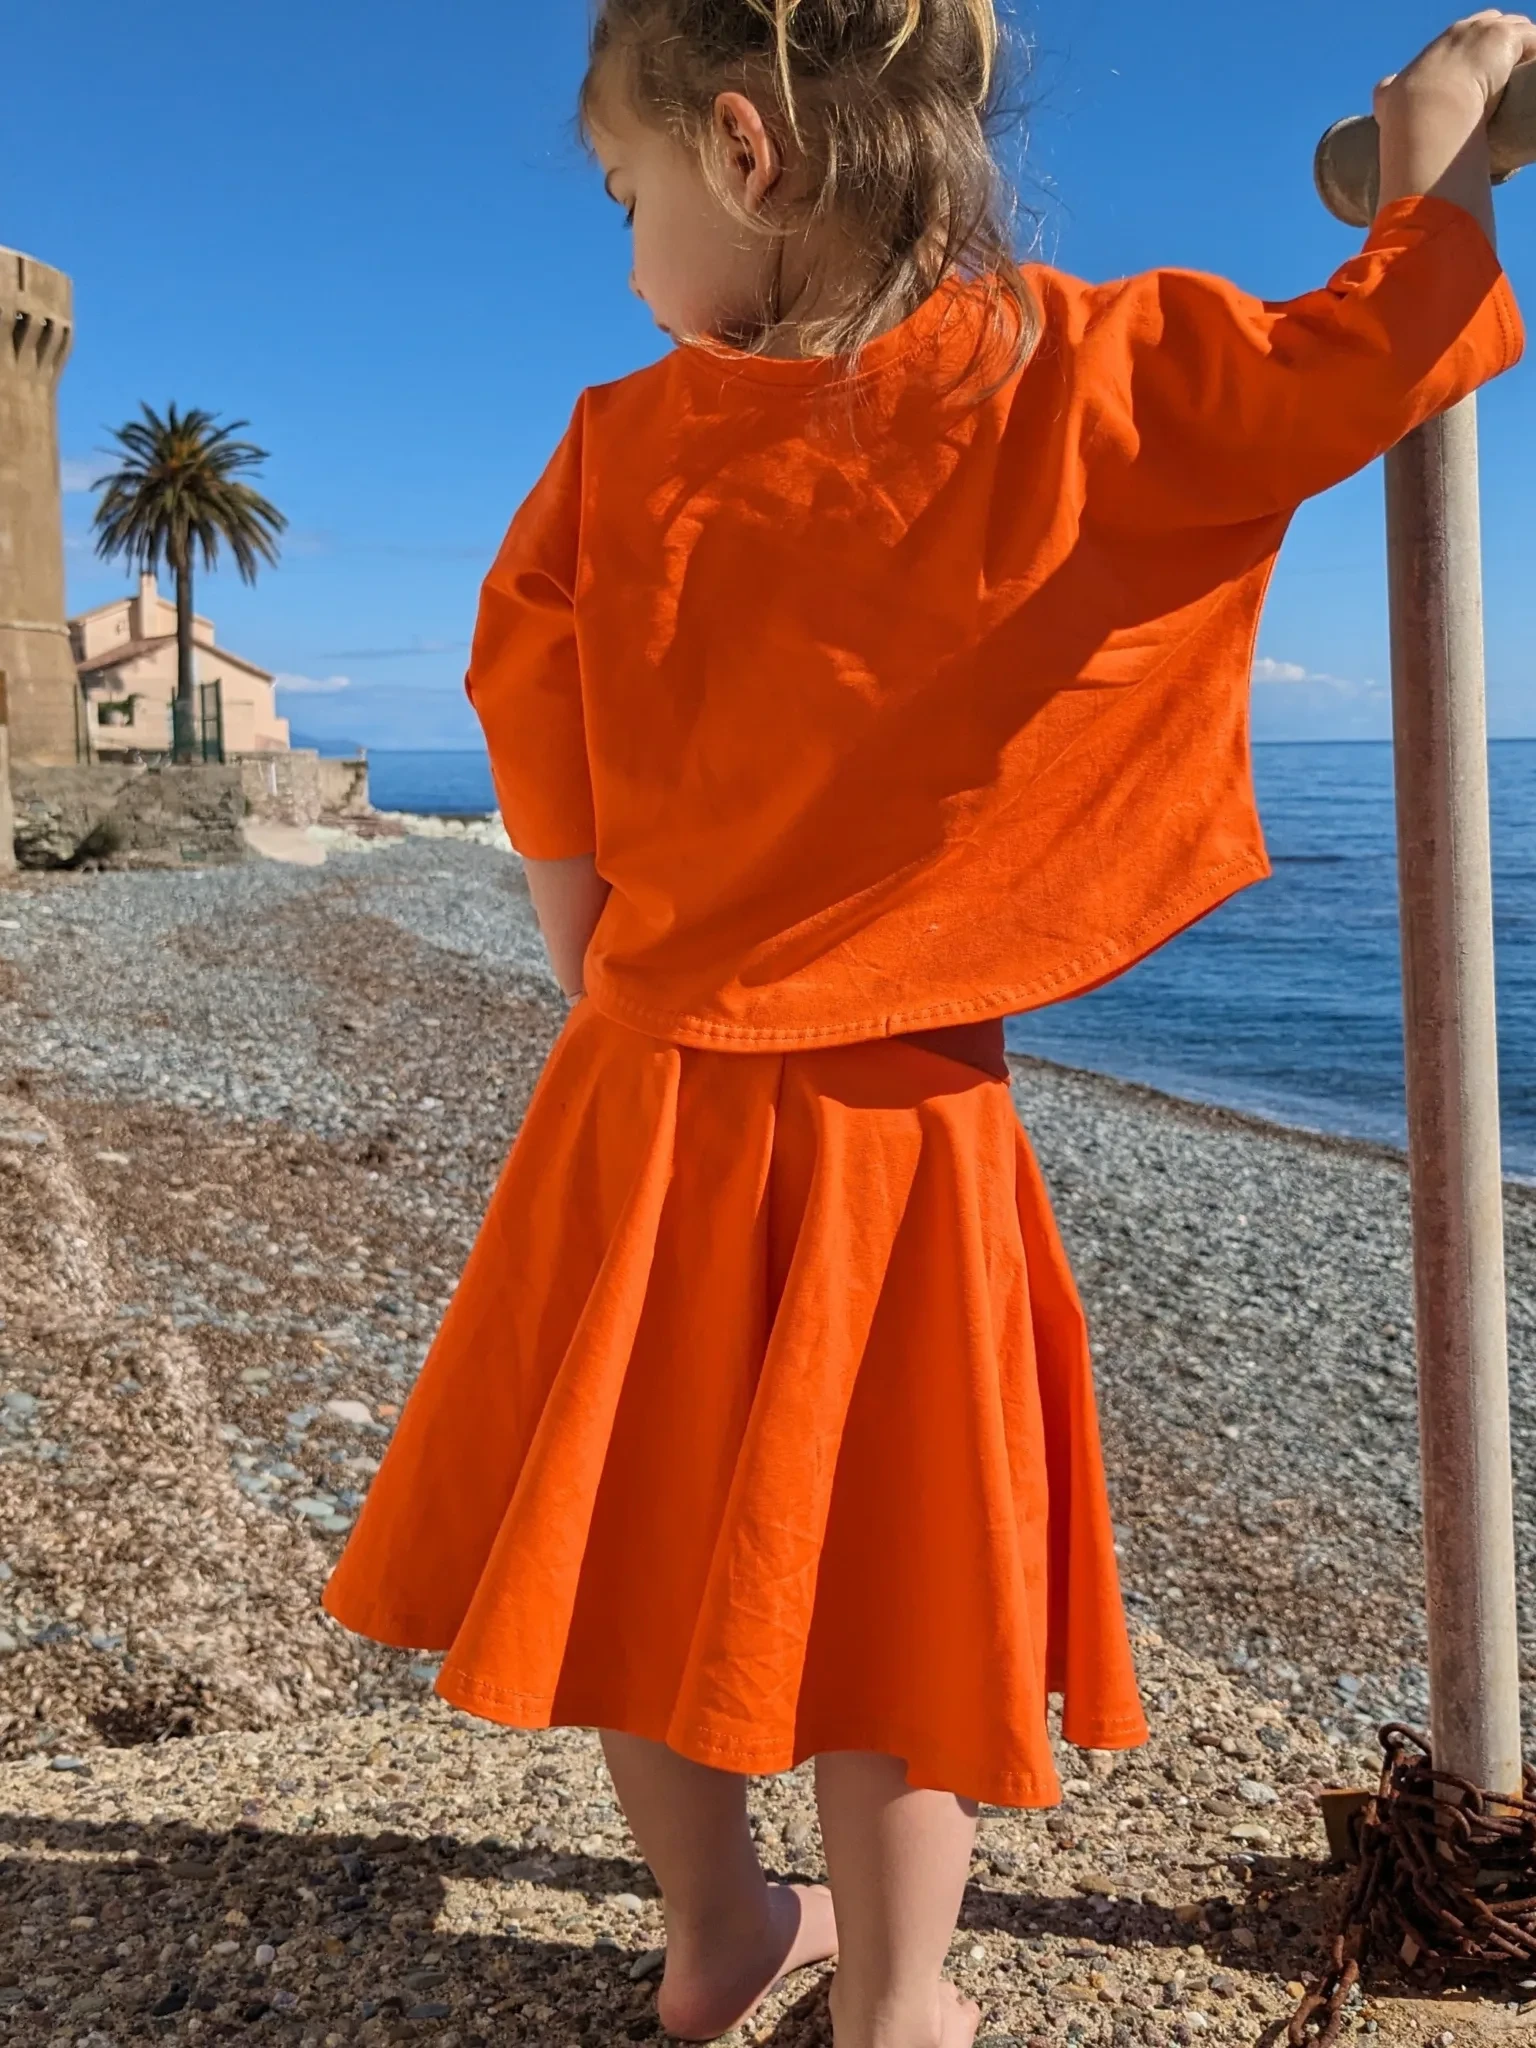 JUPE-fille-orange-été-soleil-corse